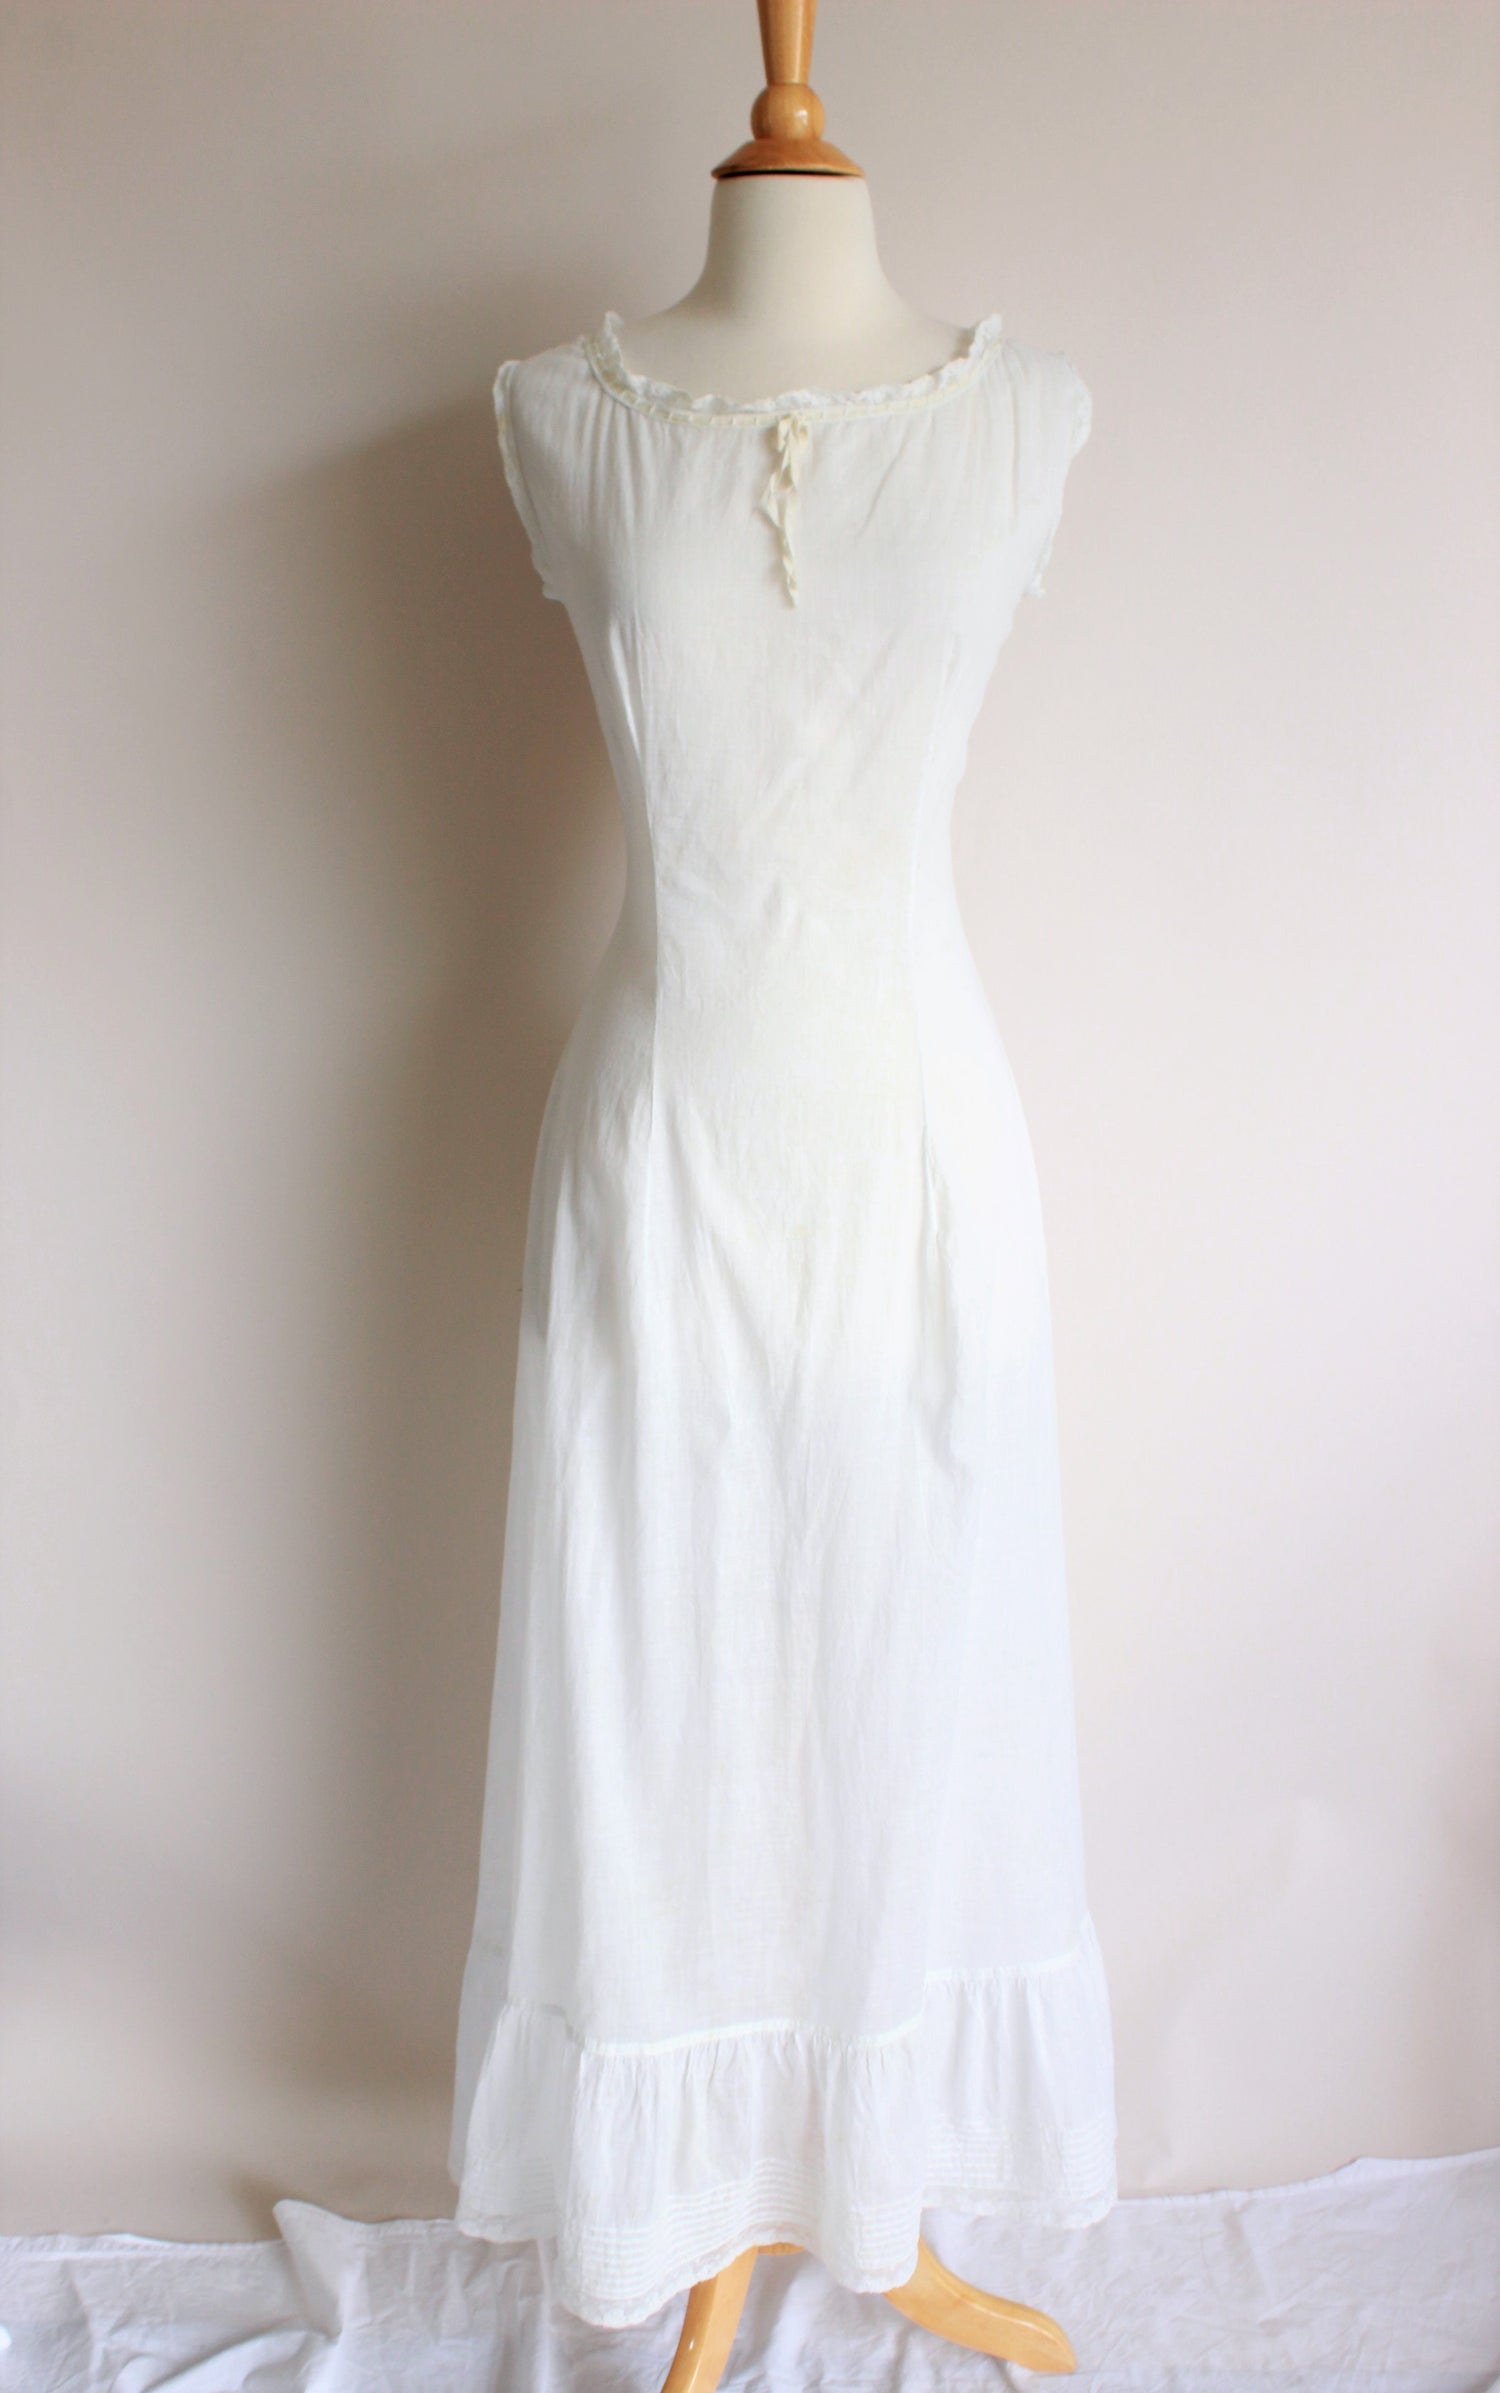 Antique Edwardian White Cotton Chemise Nightgown